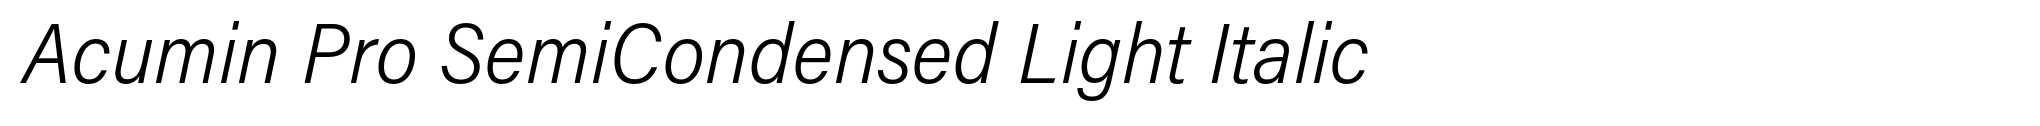 Acumin Pro SemiCondensed Light Italic image